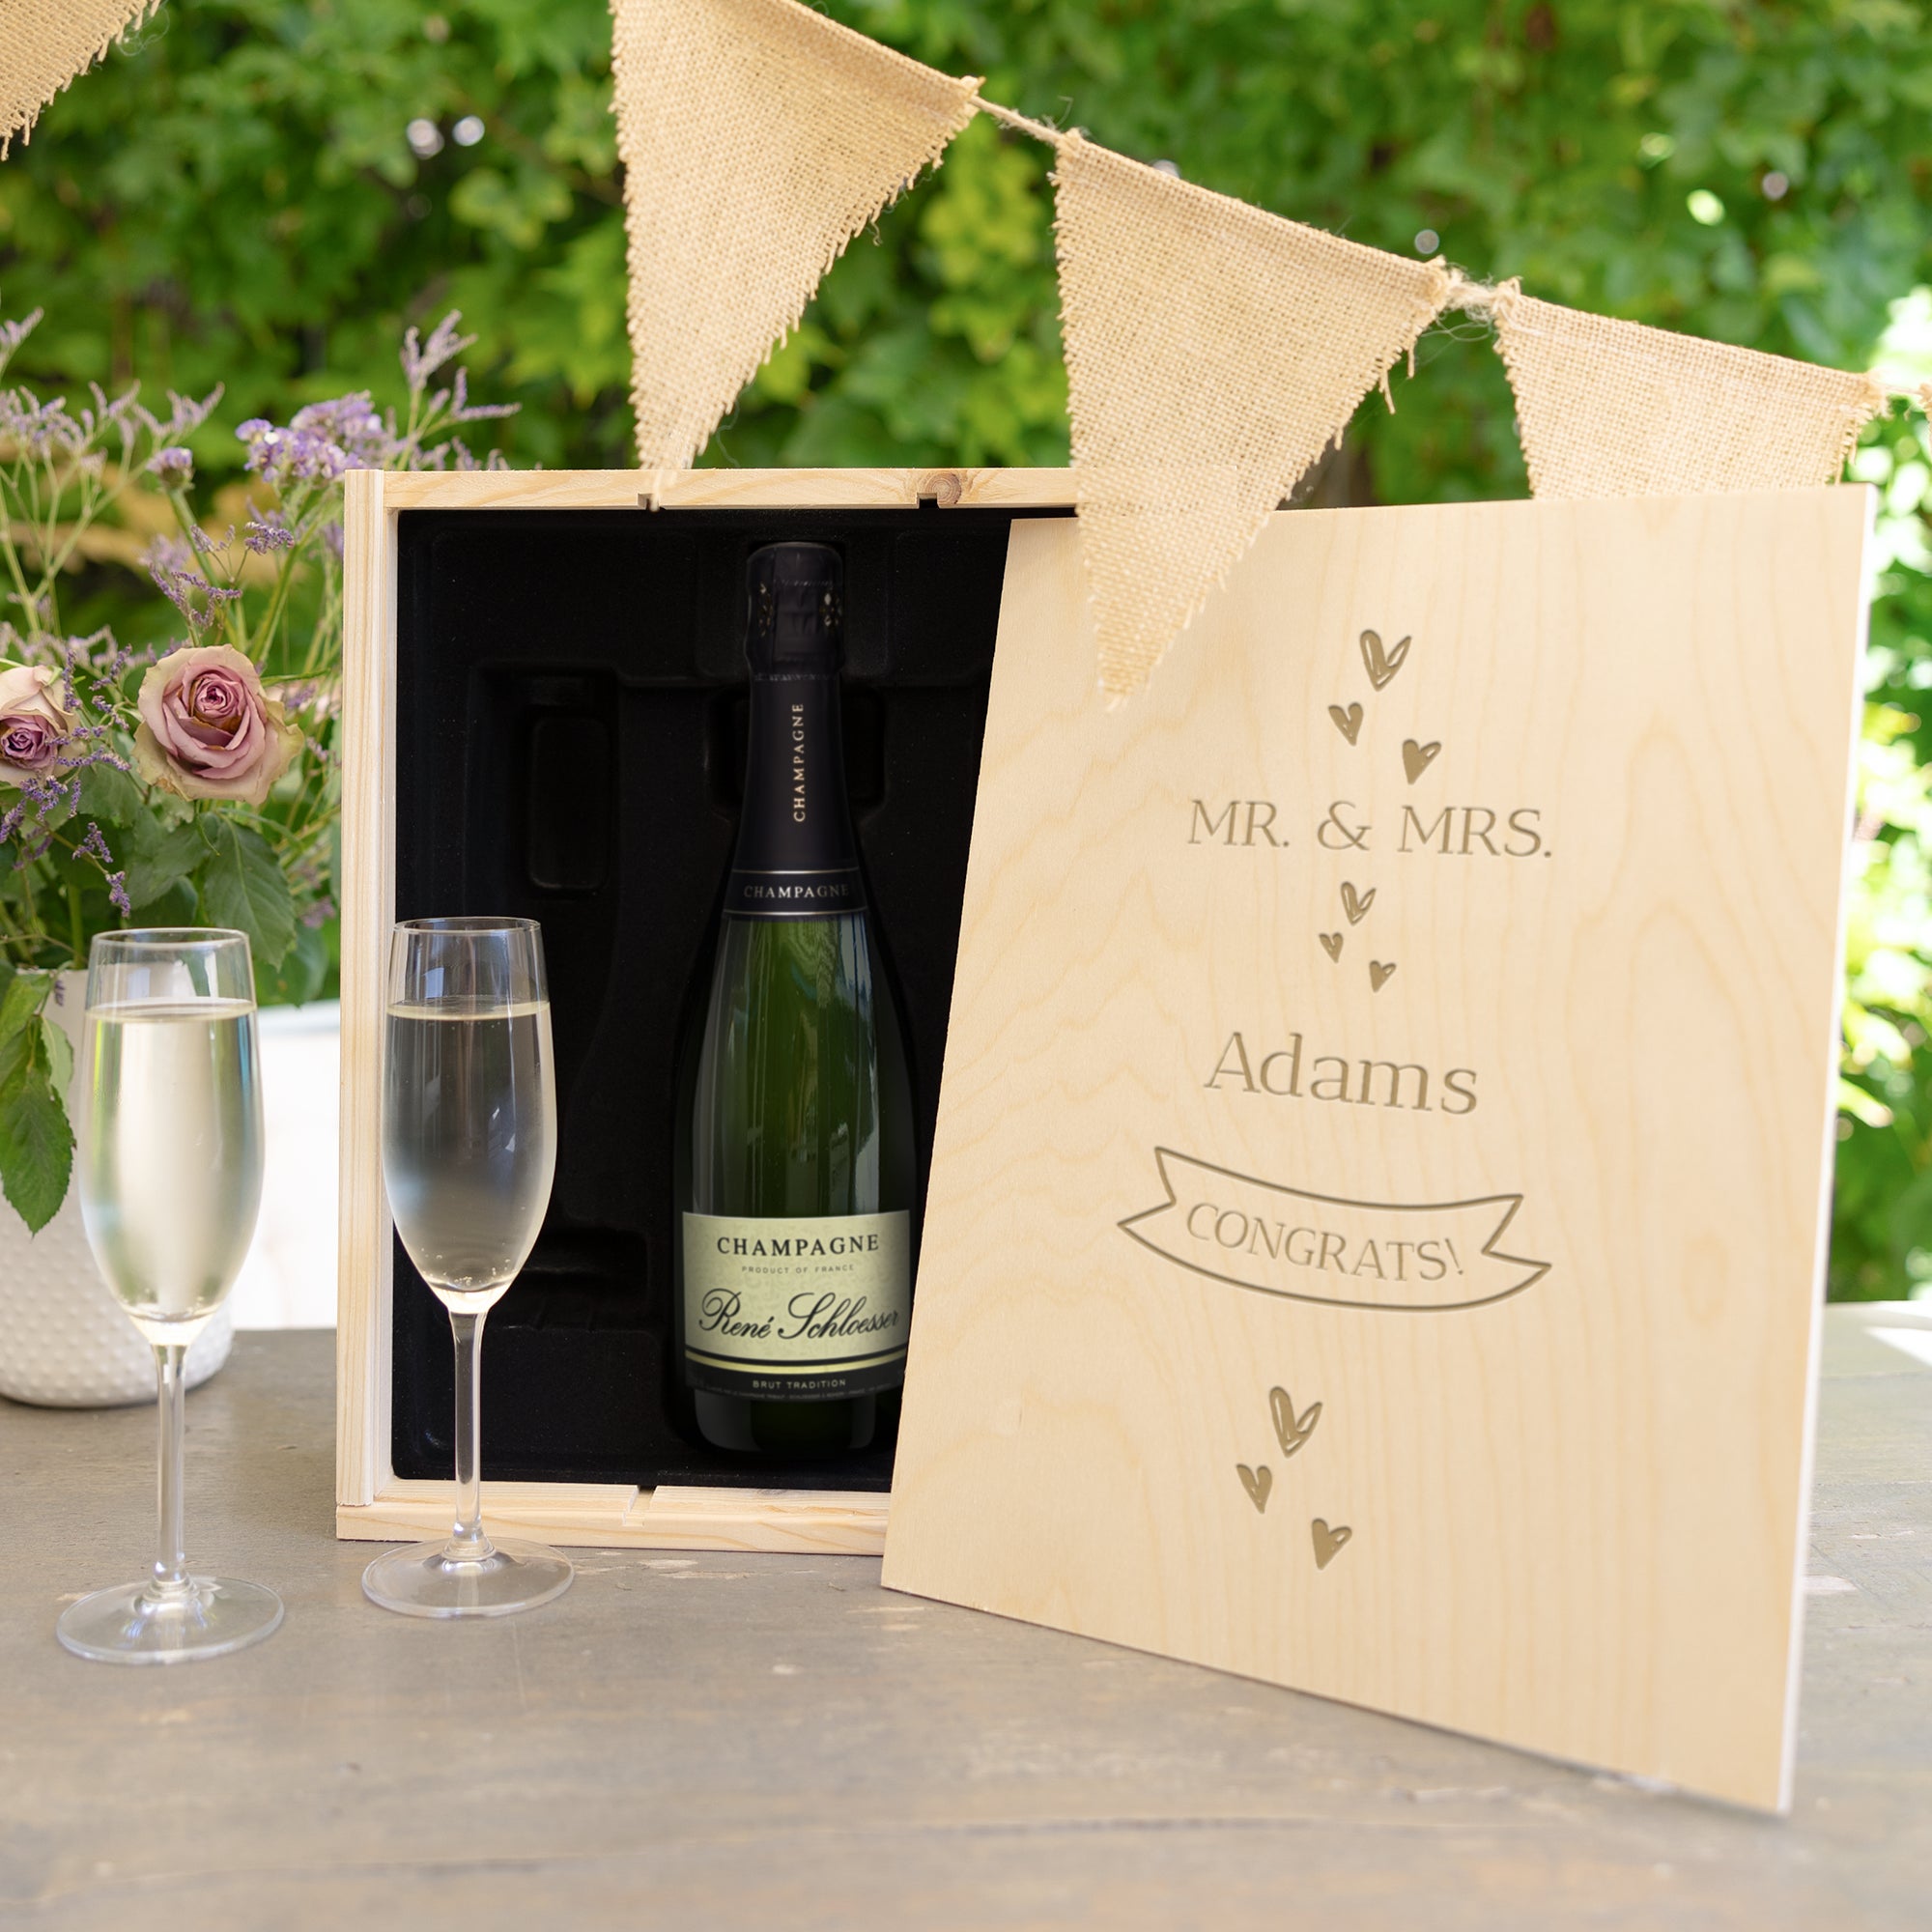 Personalised champagne gift set - Rene Schloesser (750ml) - Engraved wooden case